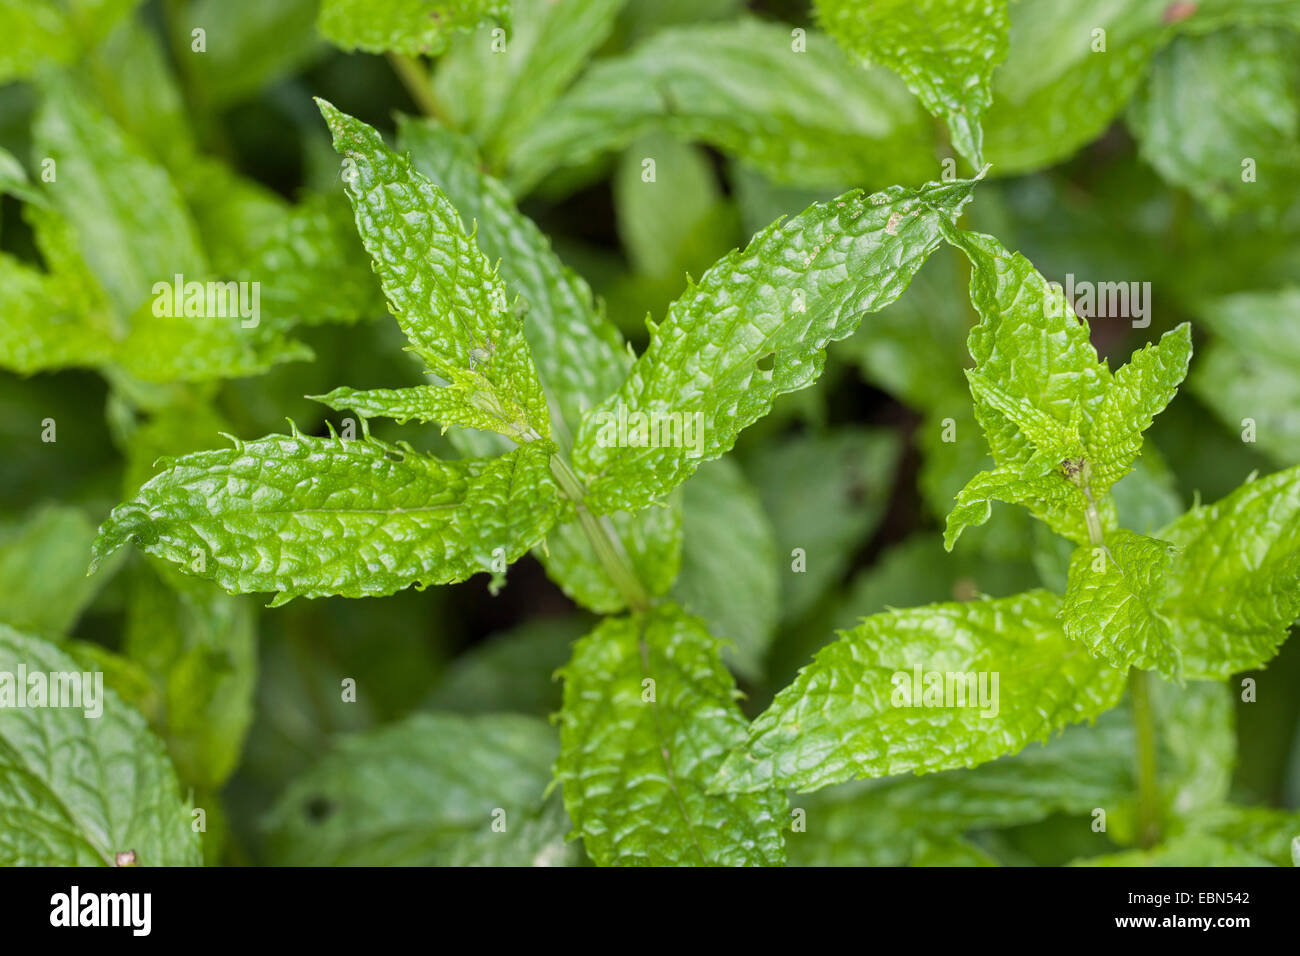 Mackerel-mint, Spear mint, Spearmint (Mentha spicata), leaves, Germany Stock Photo